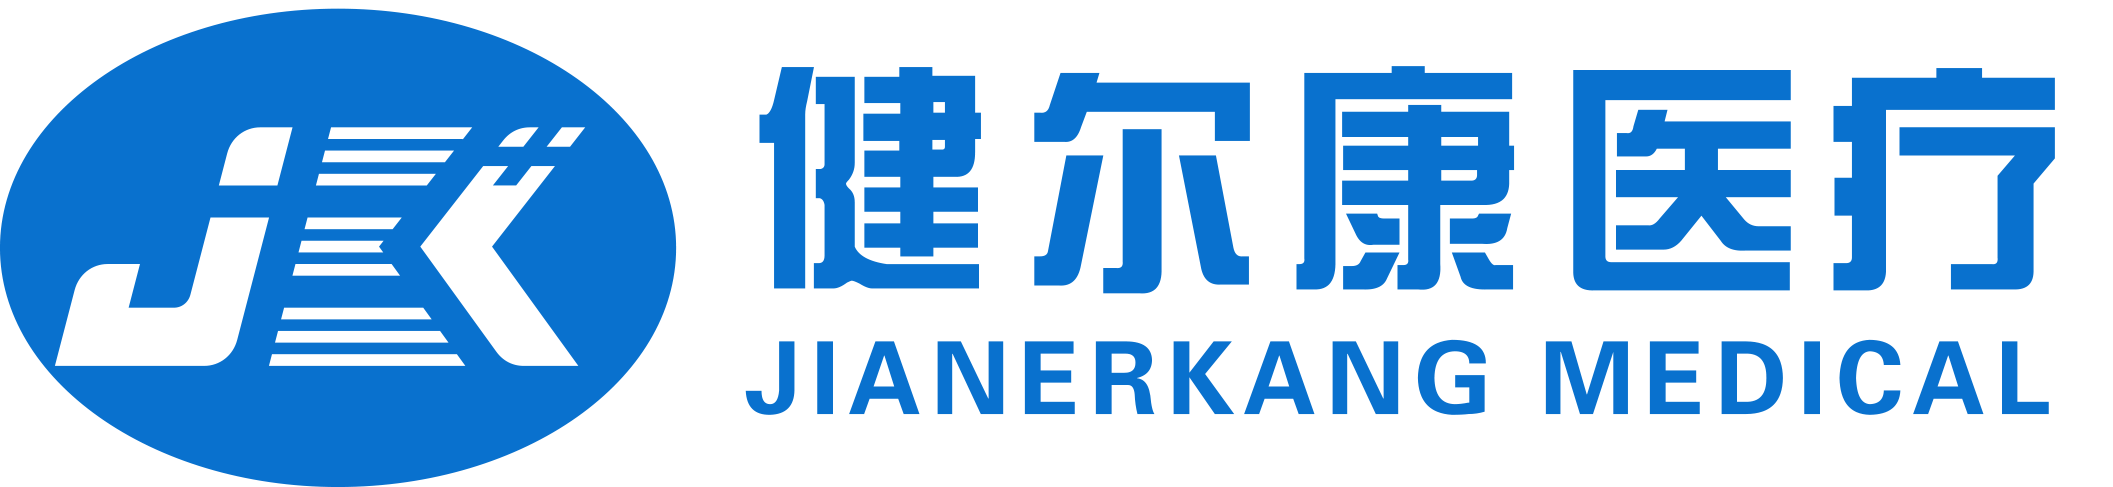 Jianerkang Medical Co., Ltd.